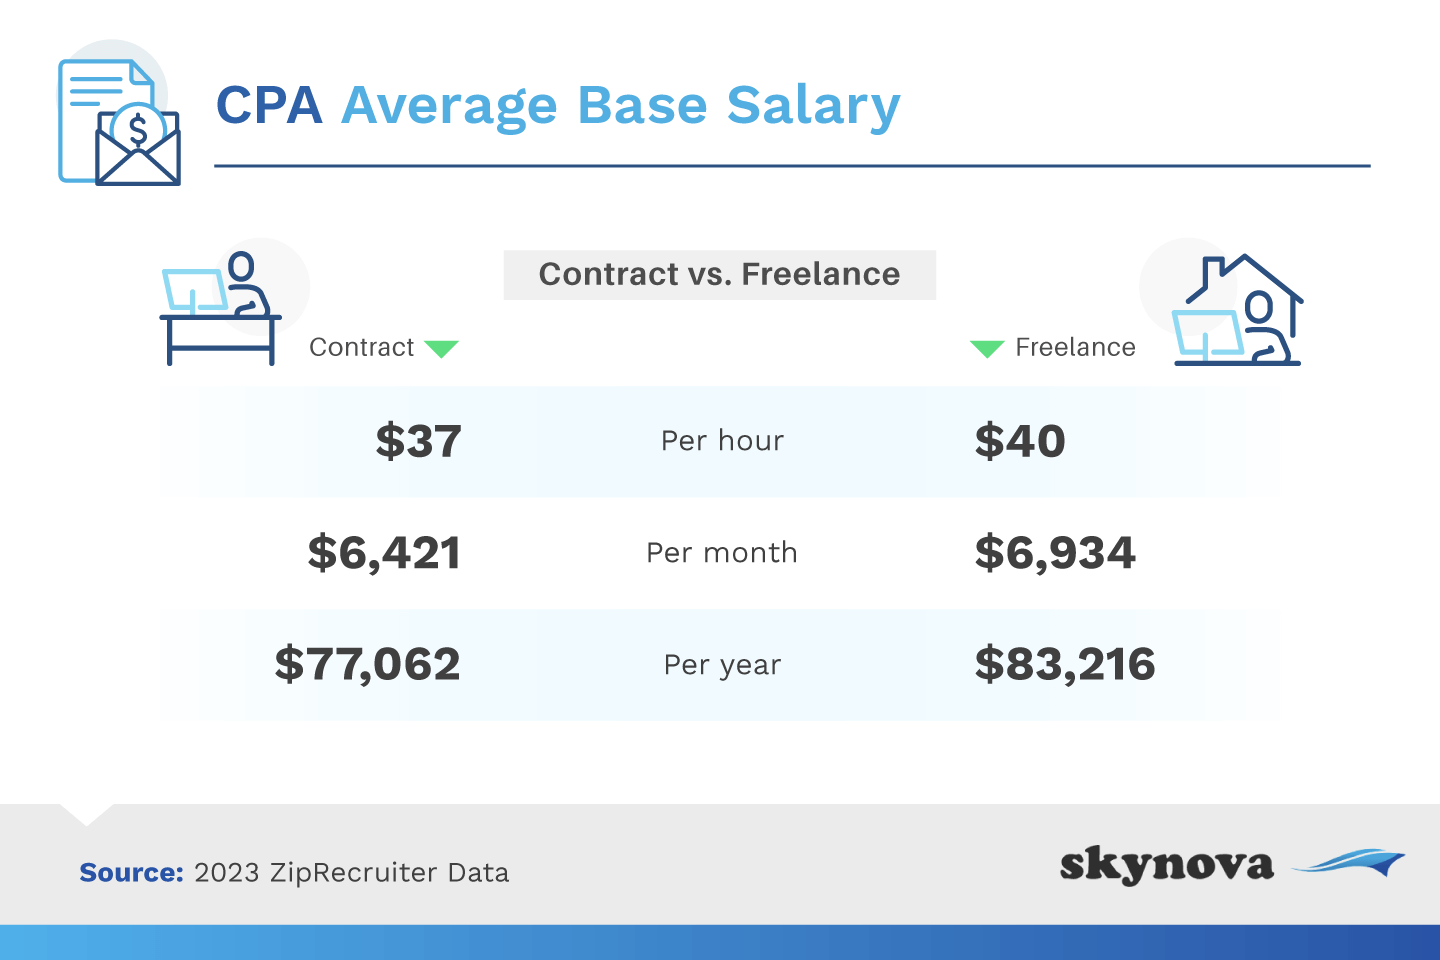 CPA average base salary